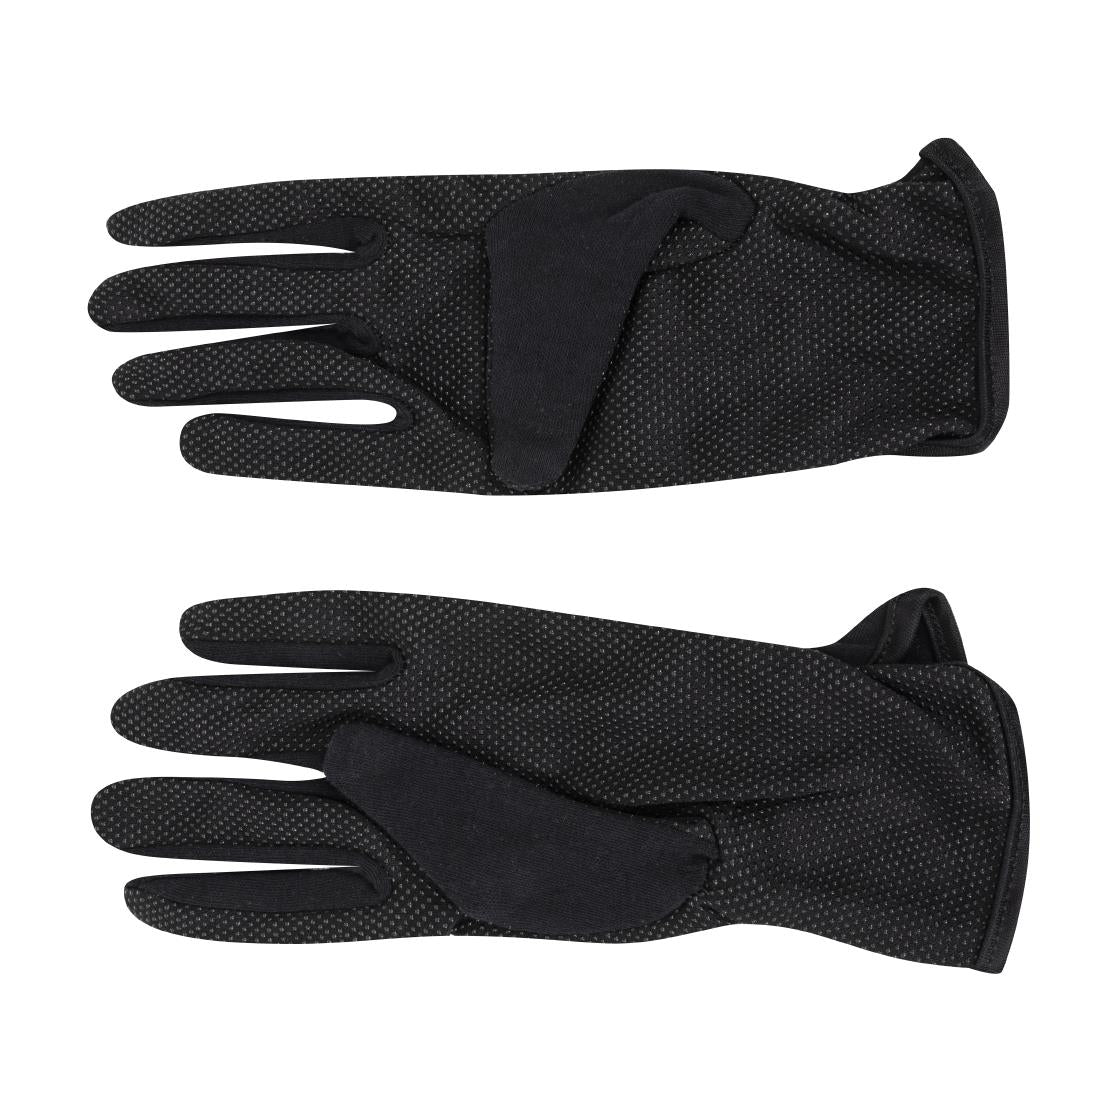 Heat Resistant Gloves Black L JD Catering Equipment Solutions Ltd